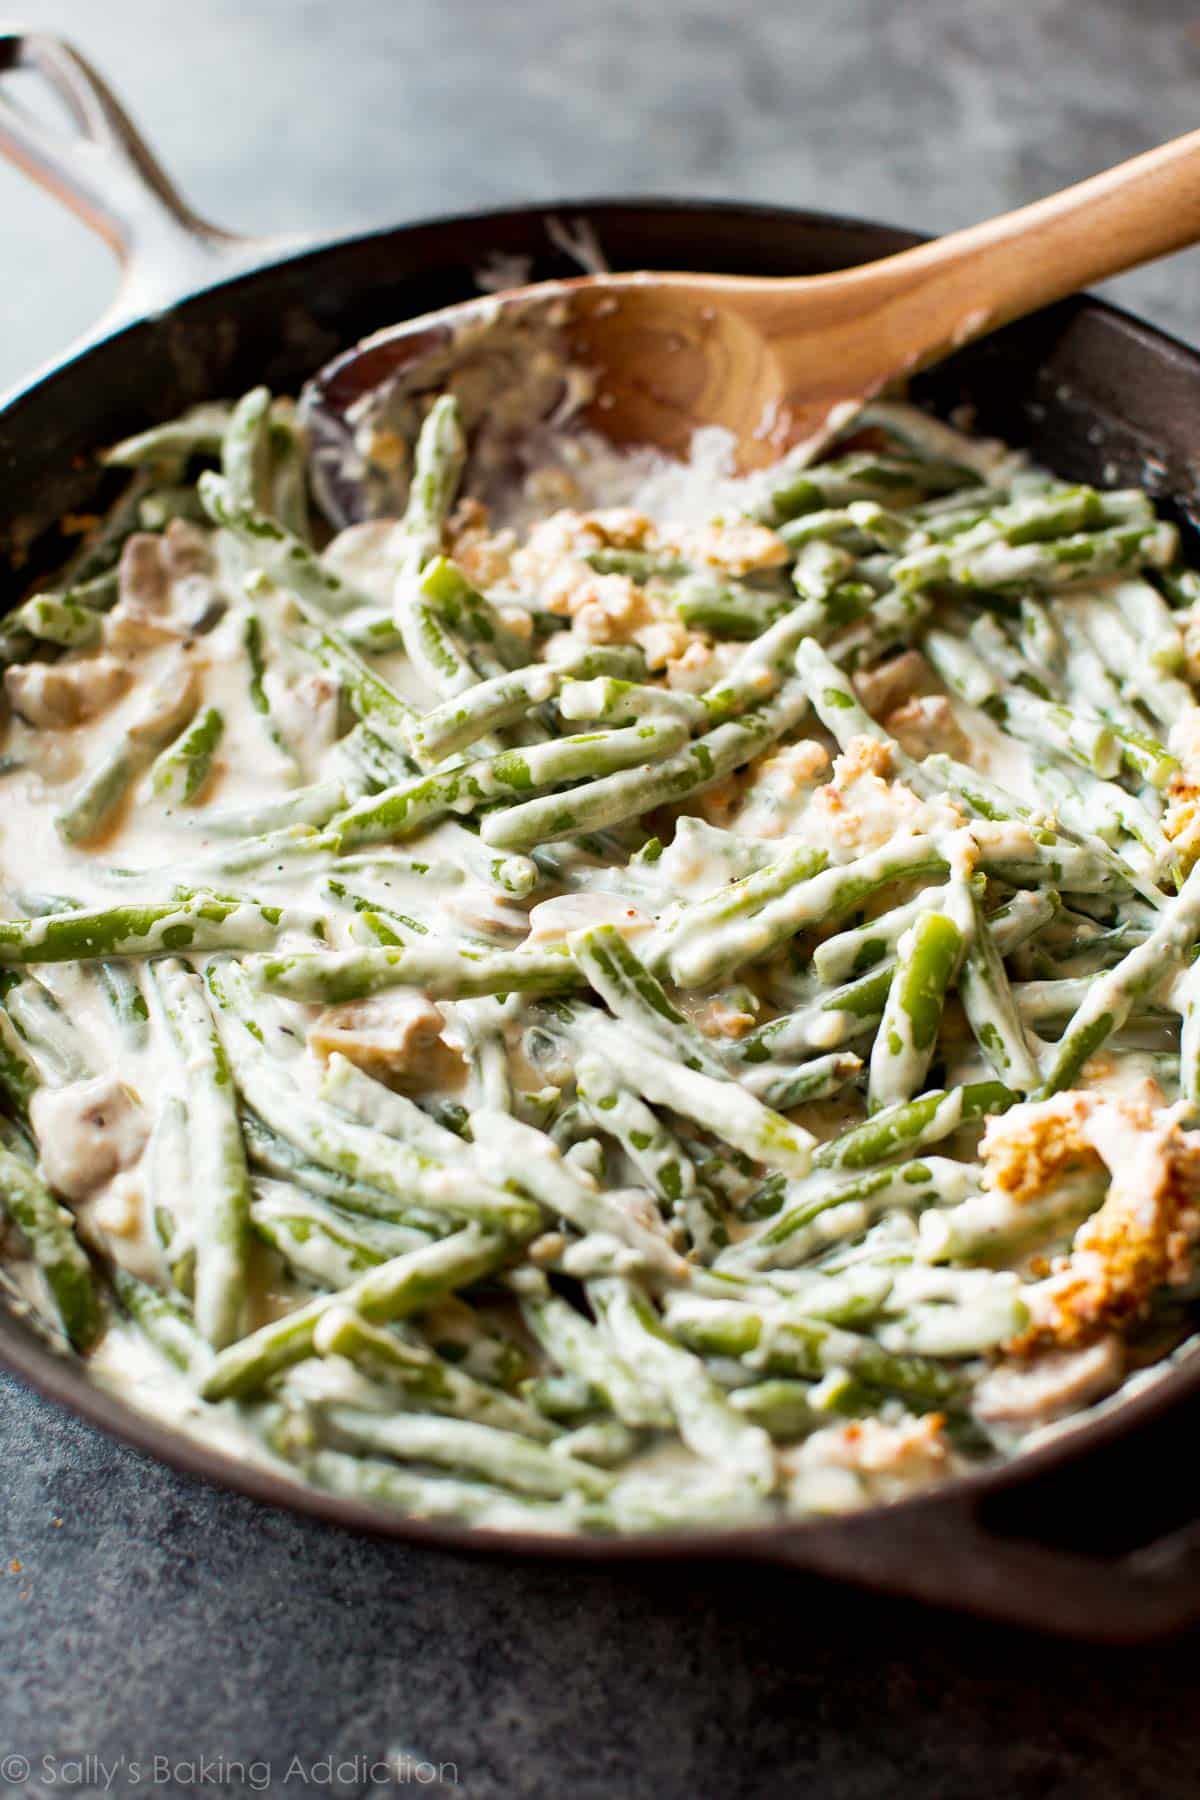 Homemade casserole with green beans